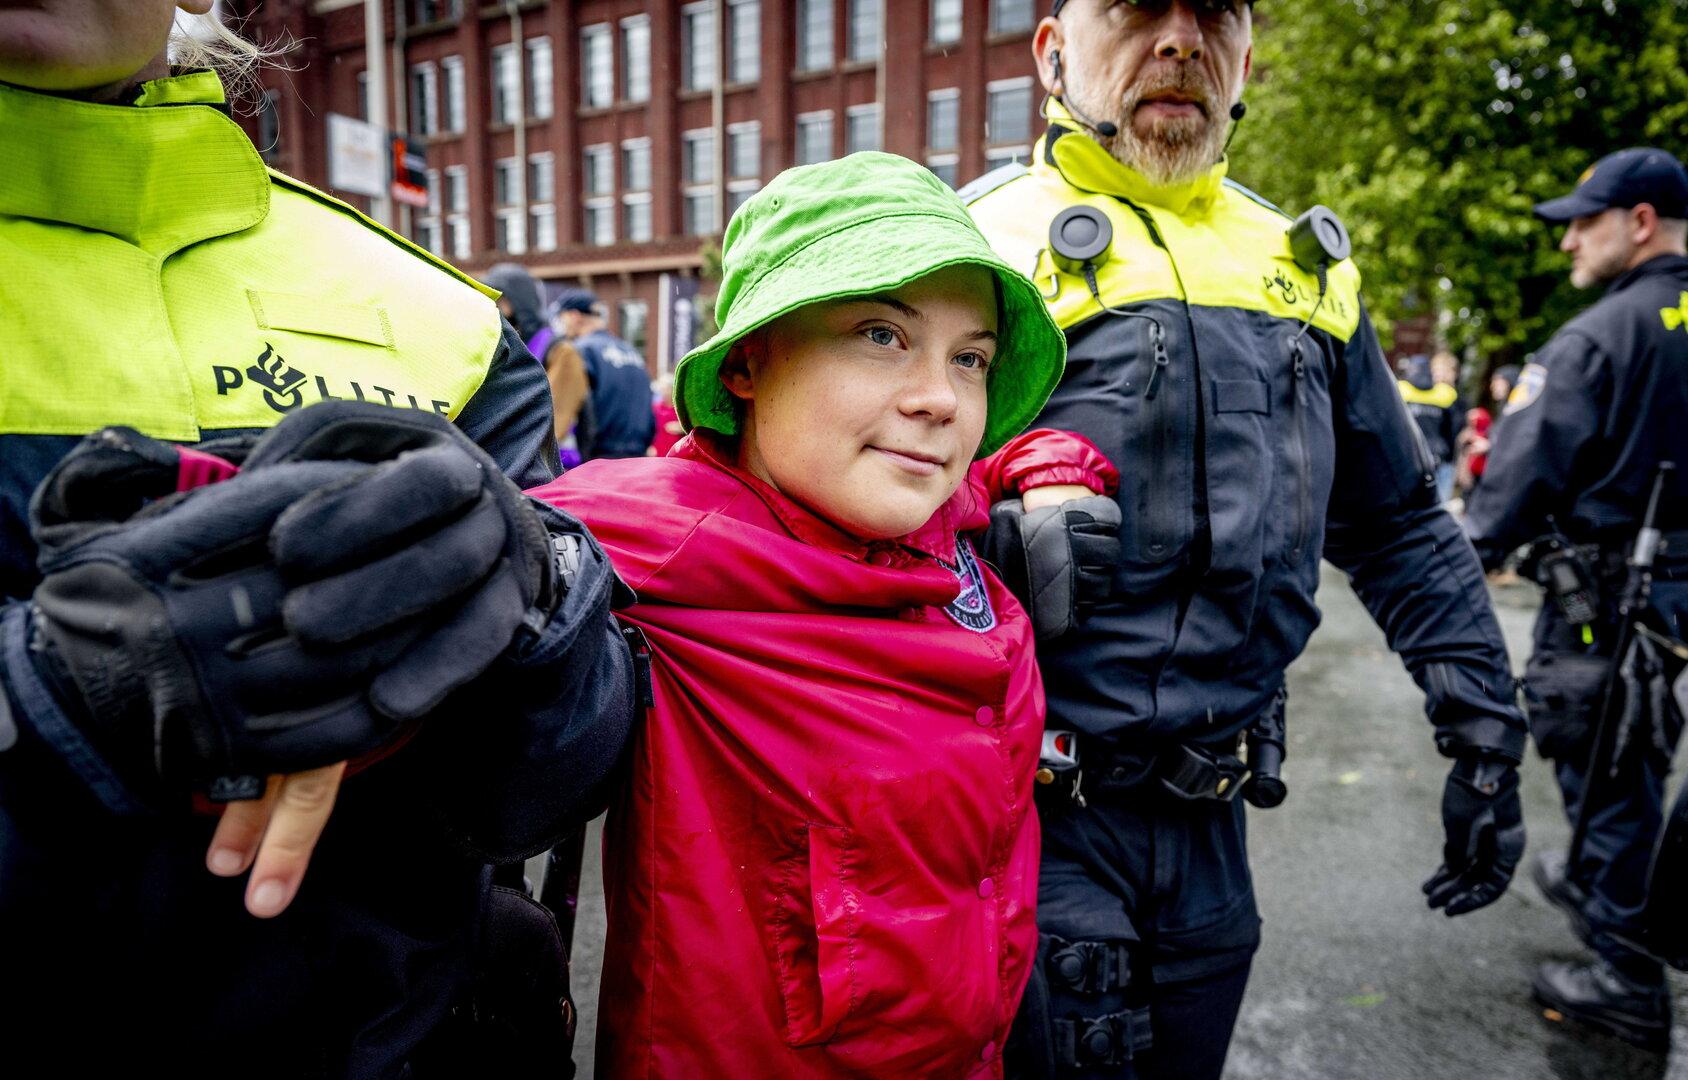 Klimaaktivistin Greta Thunberg in Den Haag festgenommen